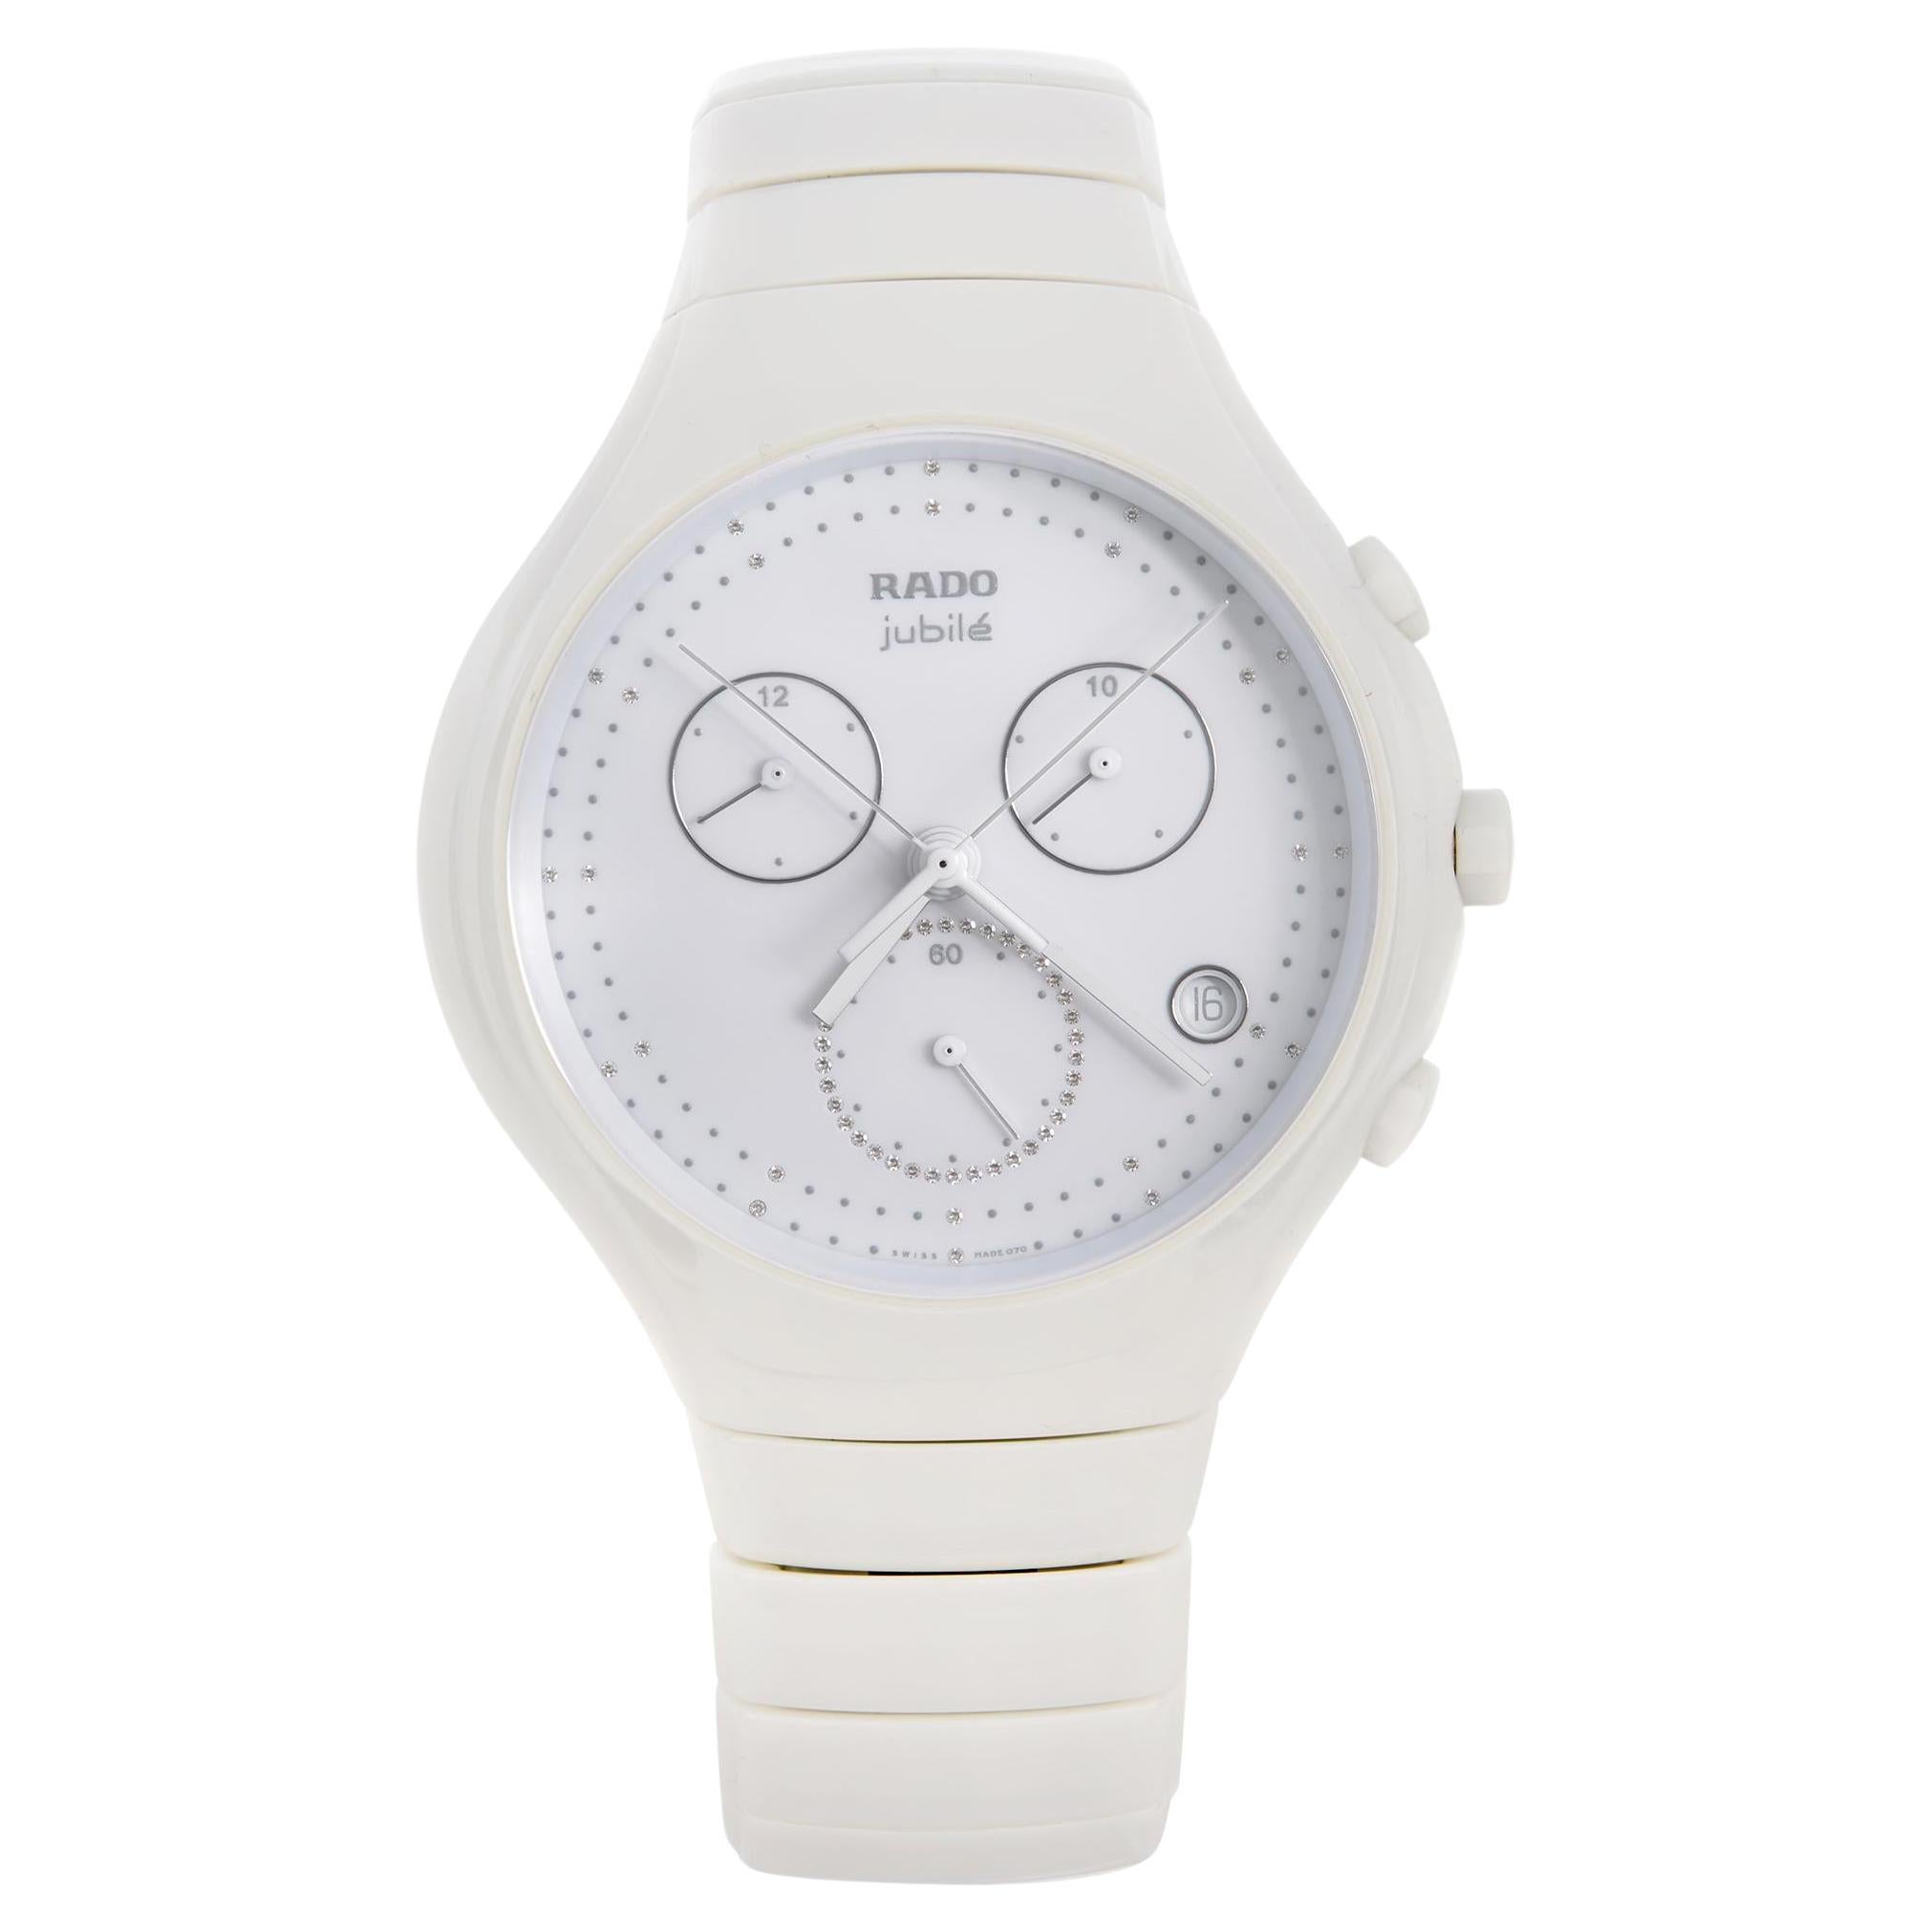 Rado True Jubile Ceramic Chronograph White Diamond Dial Quartz Watch R27832702